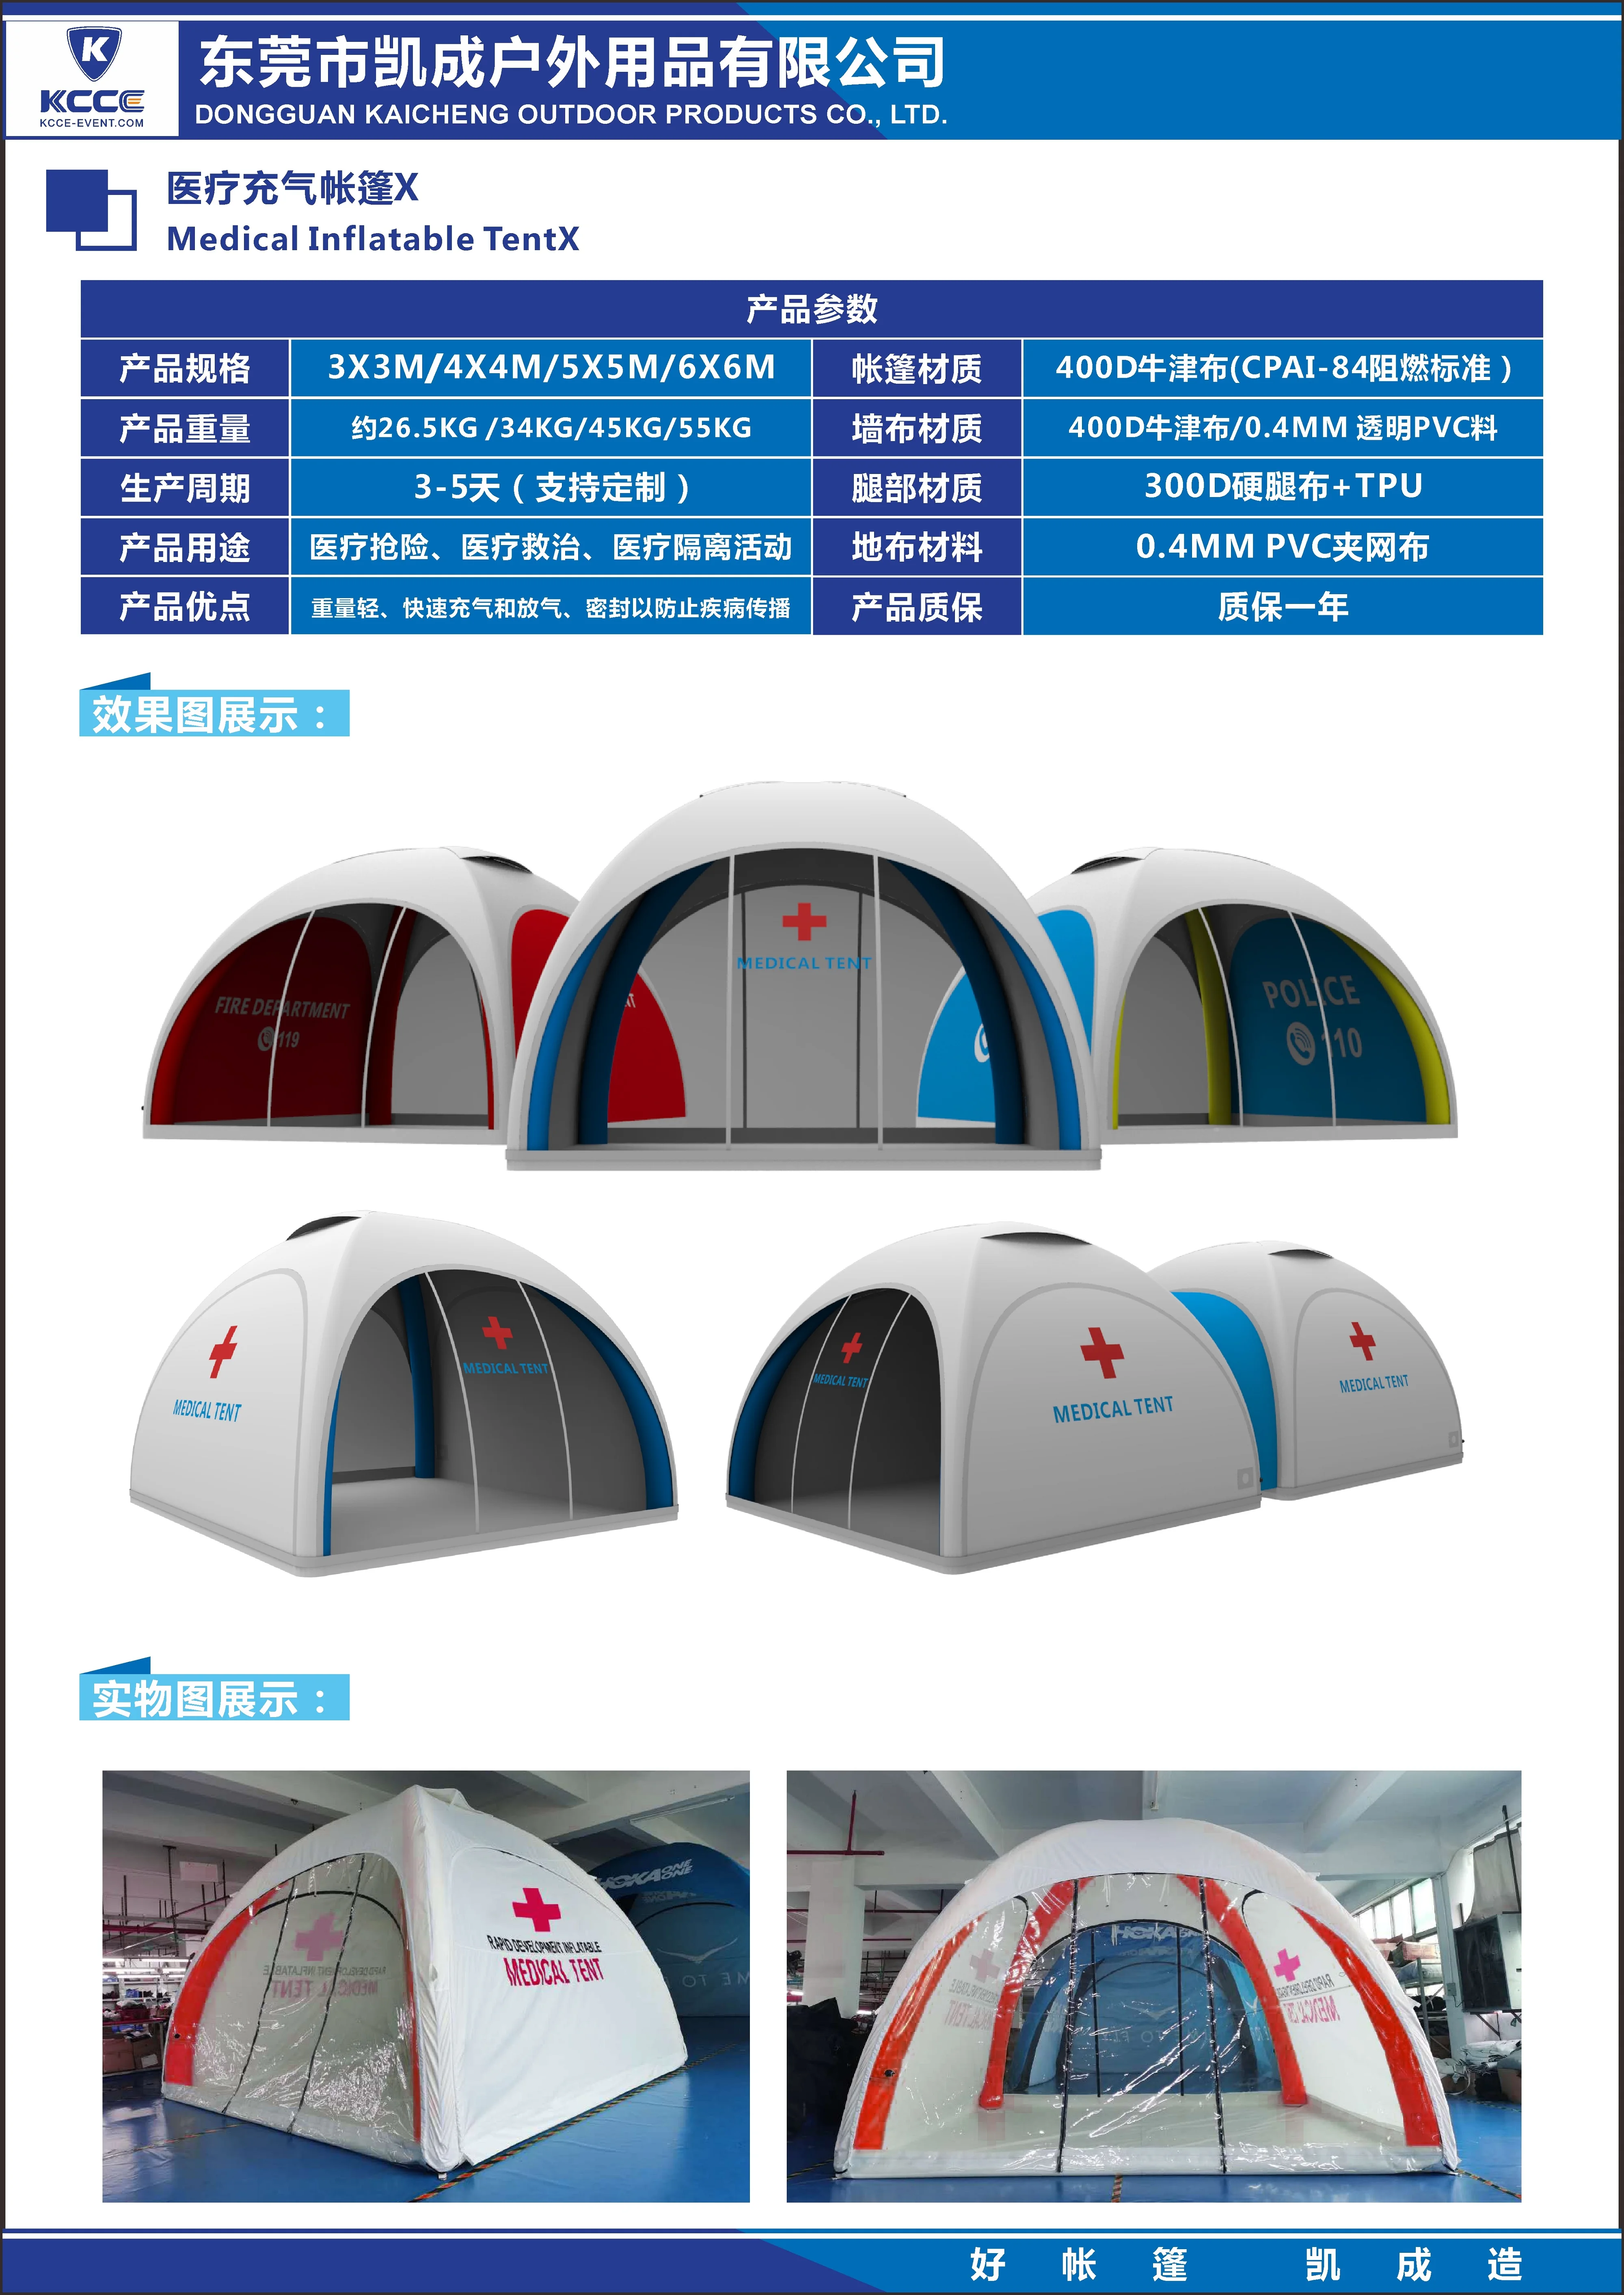 inflatable emergency medical Quarantine tent